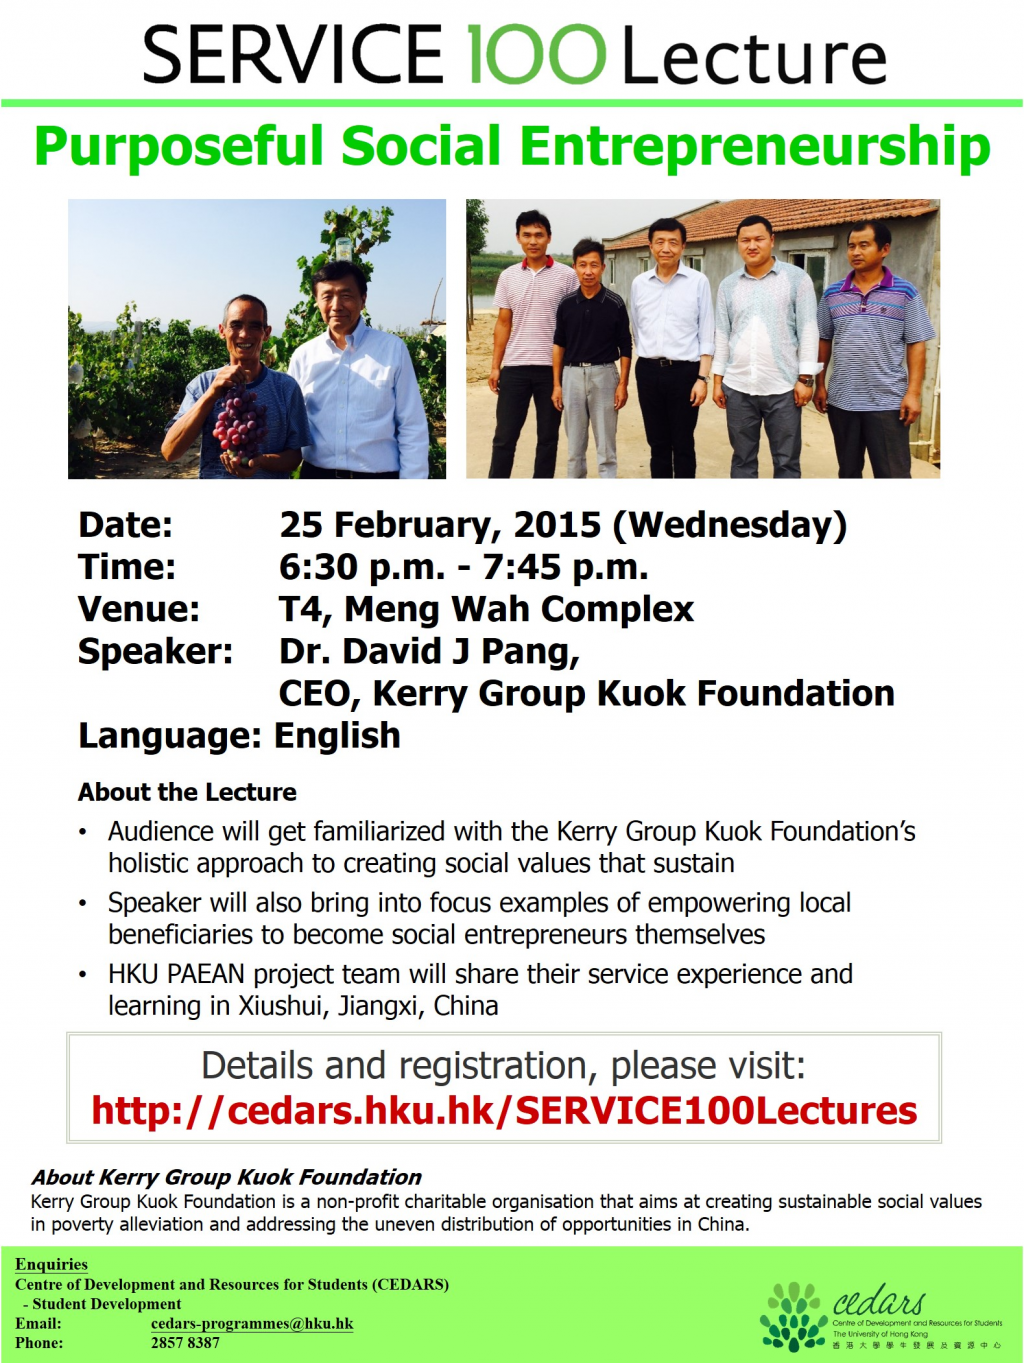 SERVICE 100 Lecture: Purposeful Social Entrepreneurship